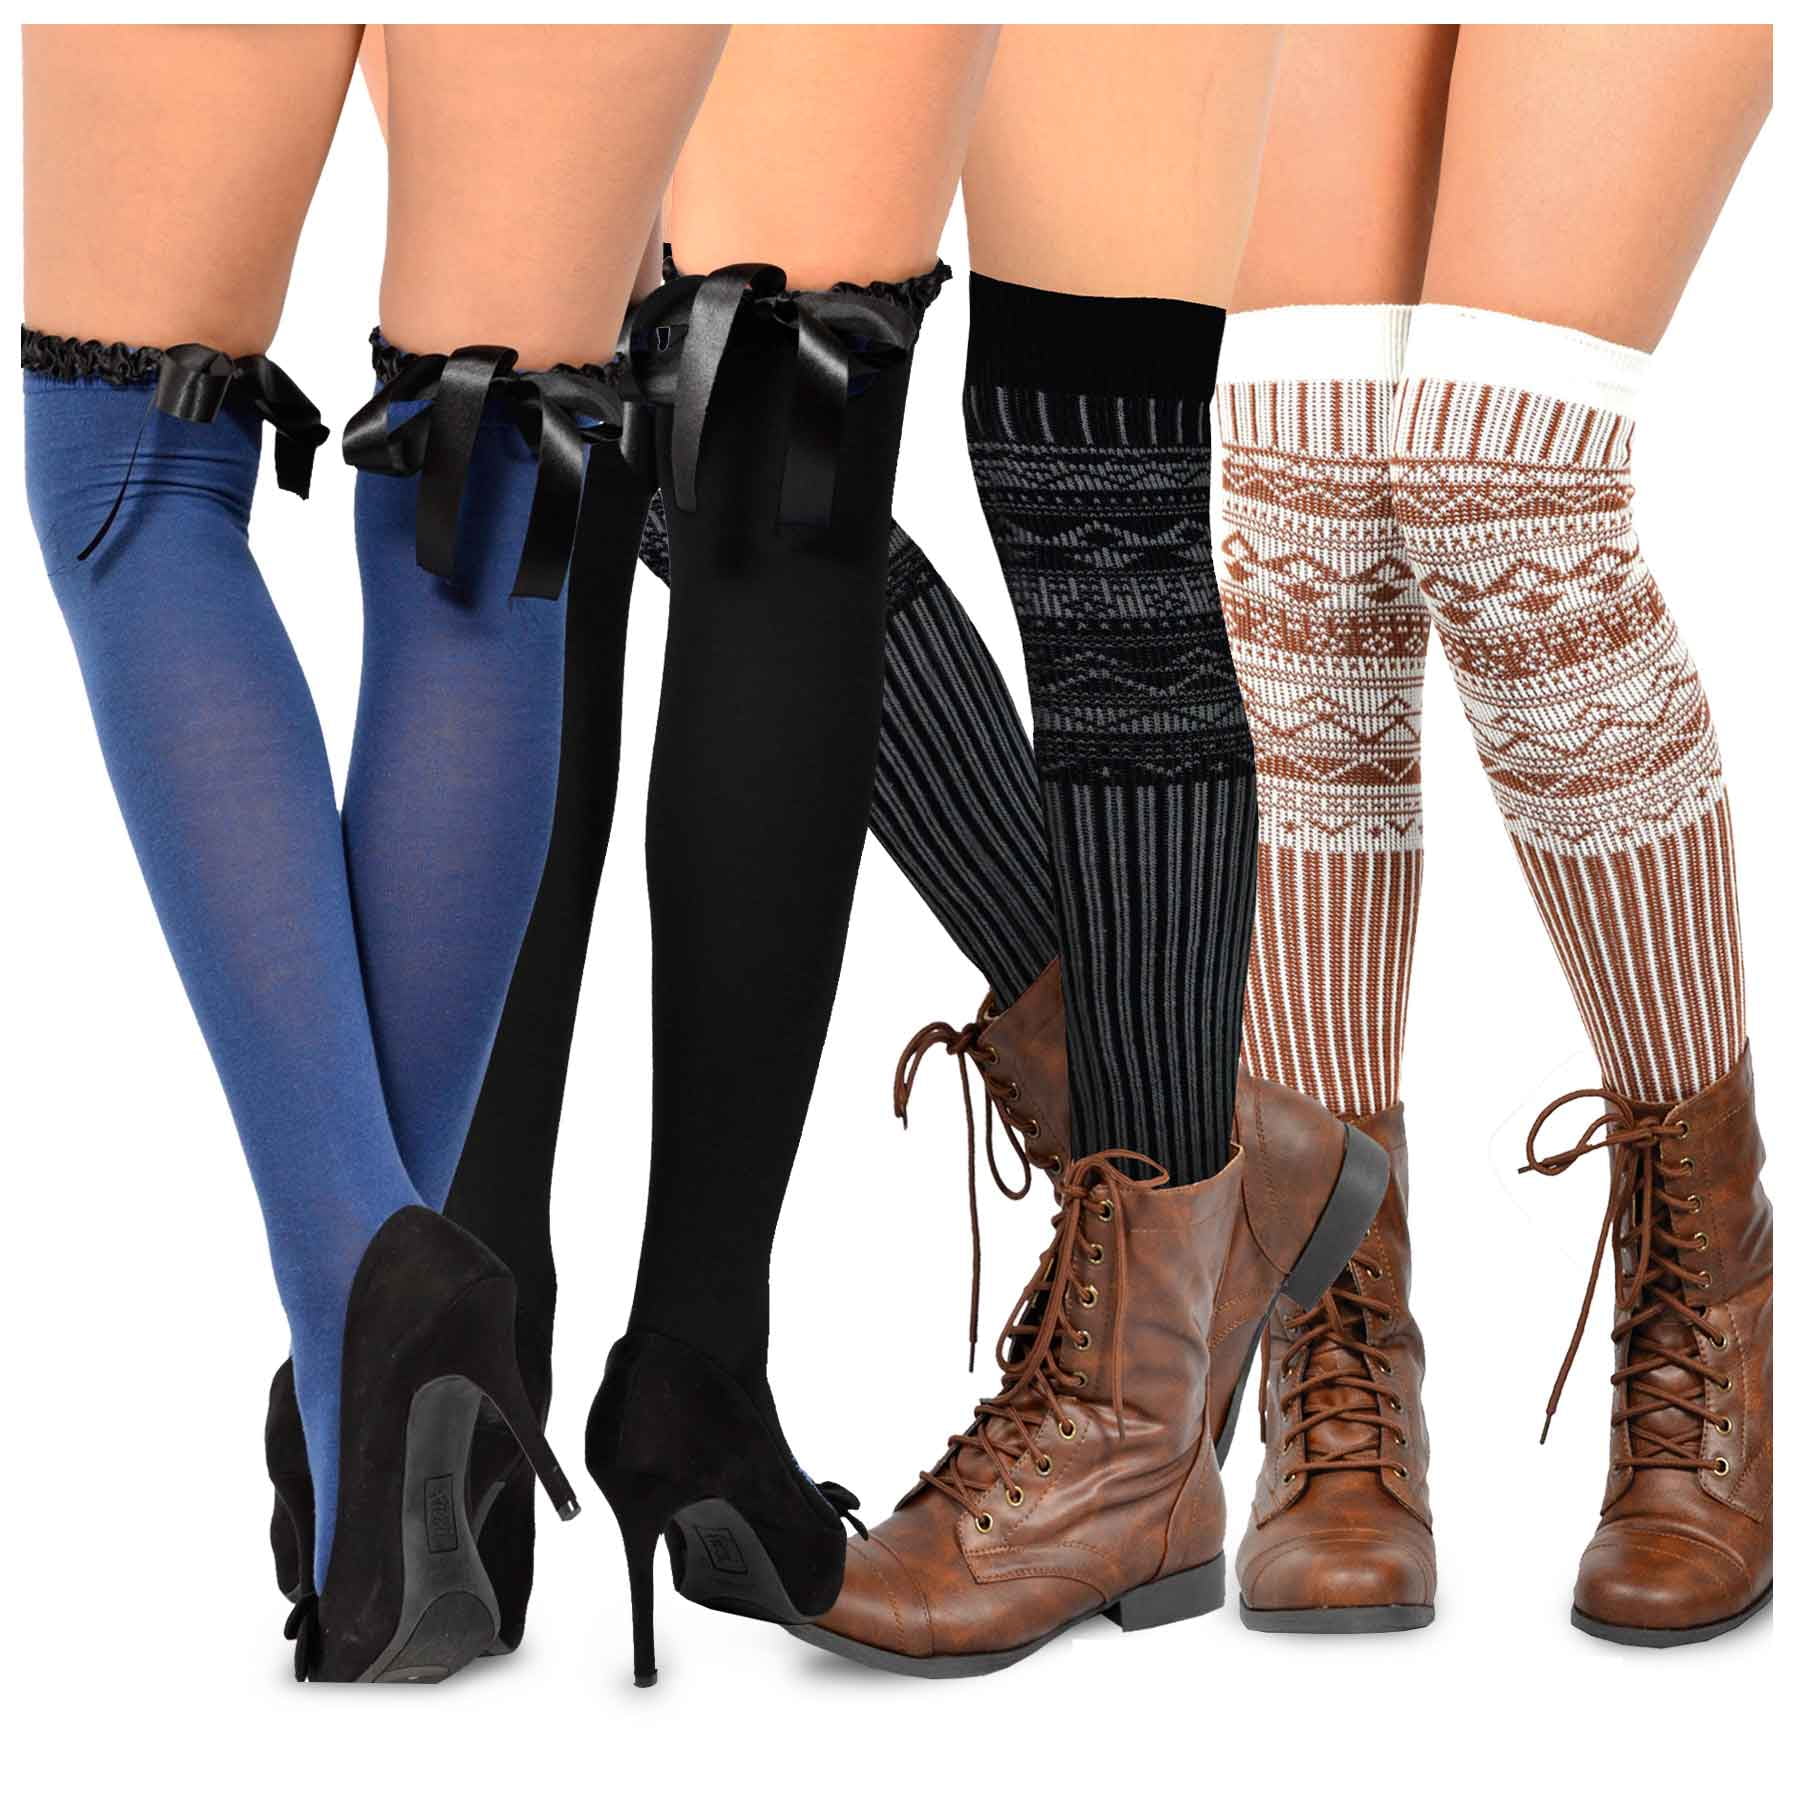 TeeHee Women's Fashion Over the Knee High Socks - 4 Pair Combo (Nordic ...